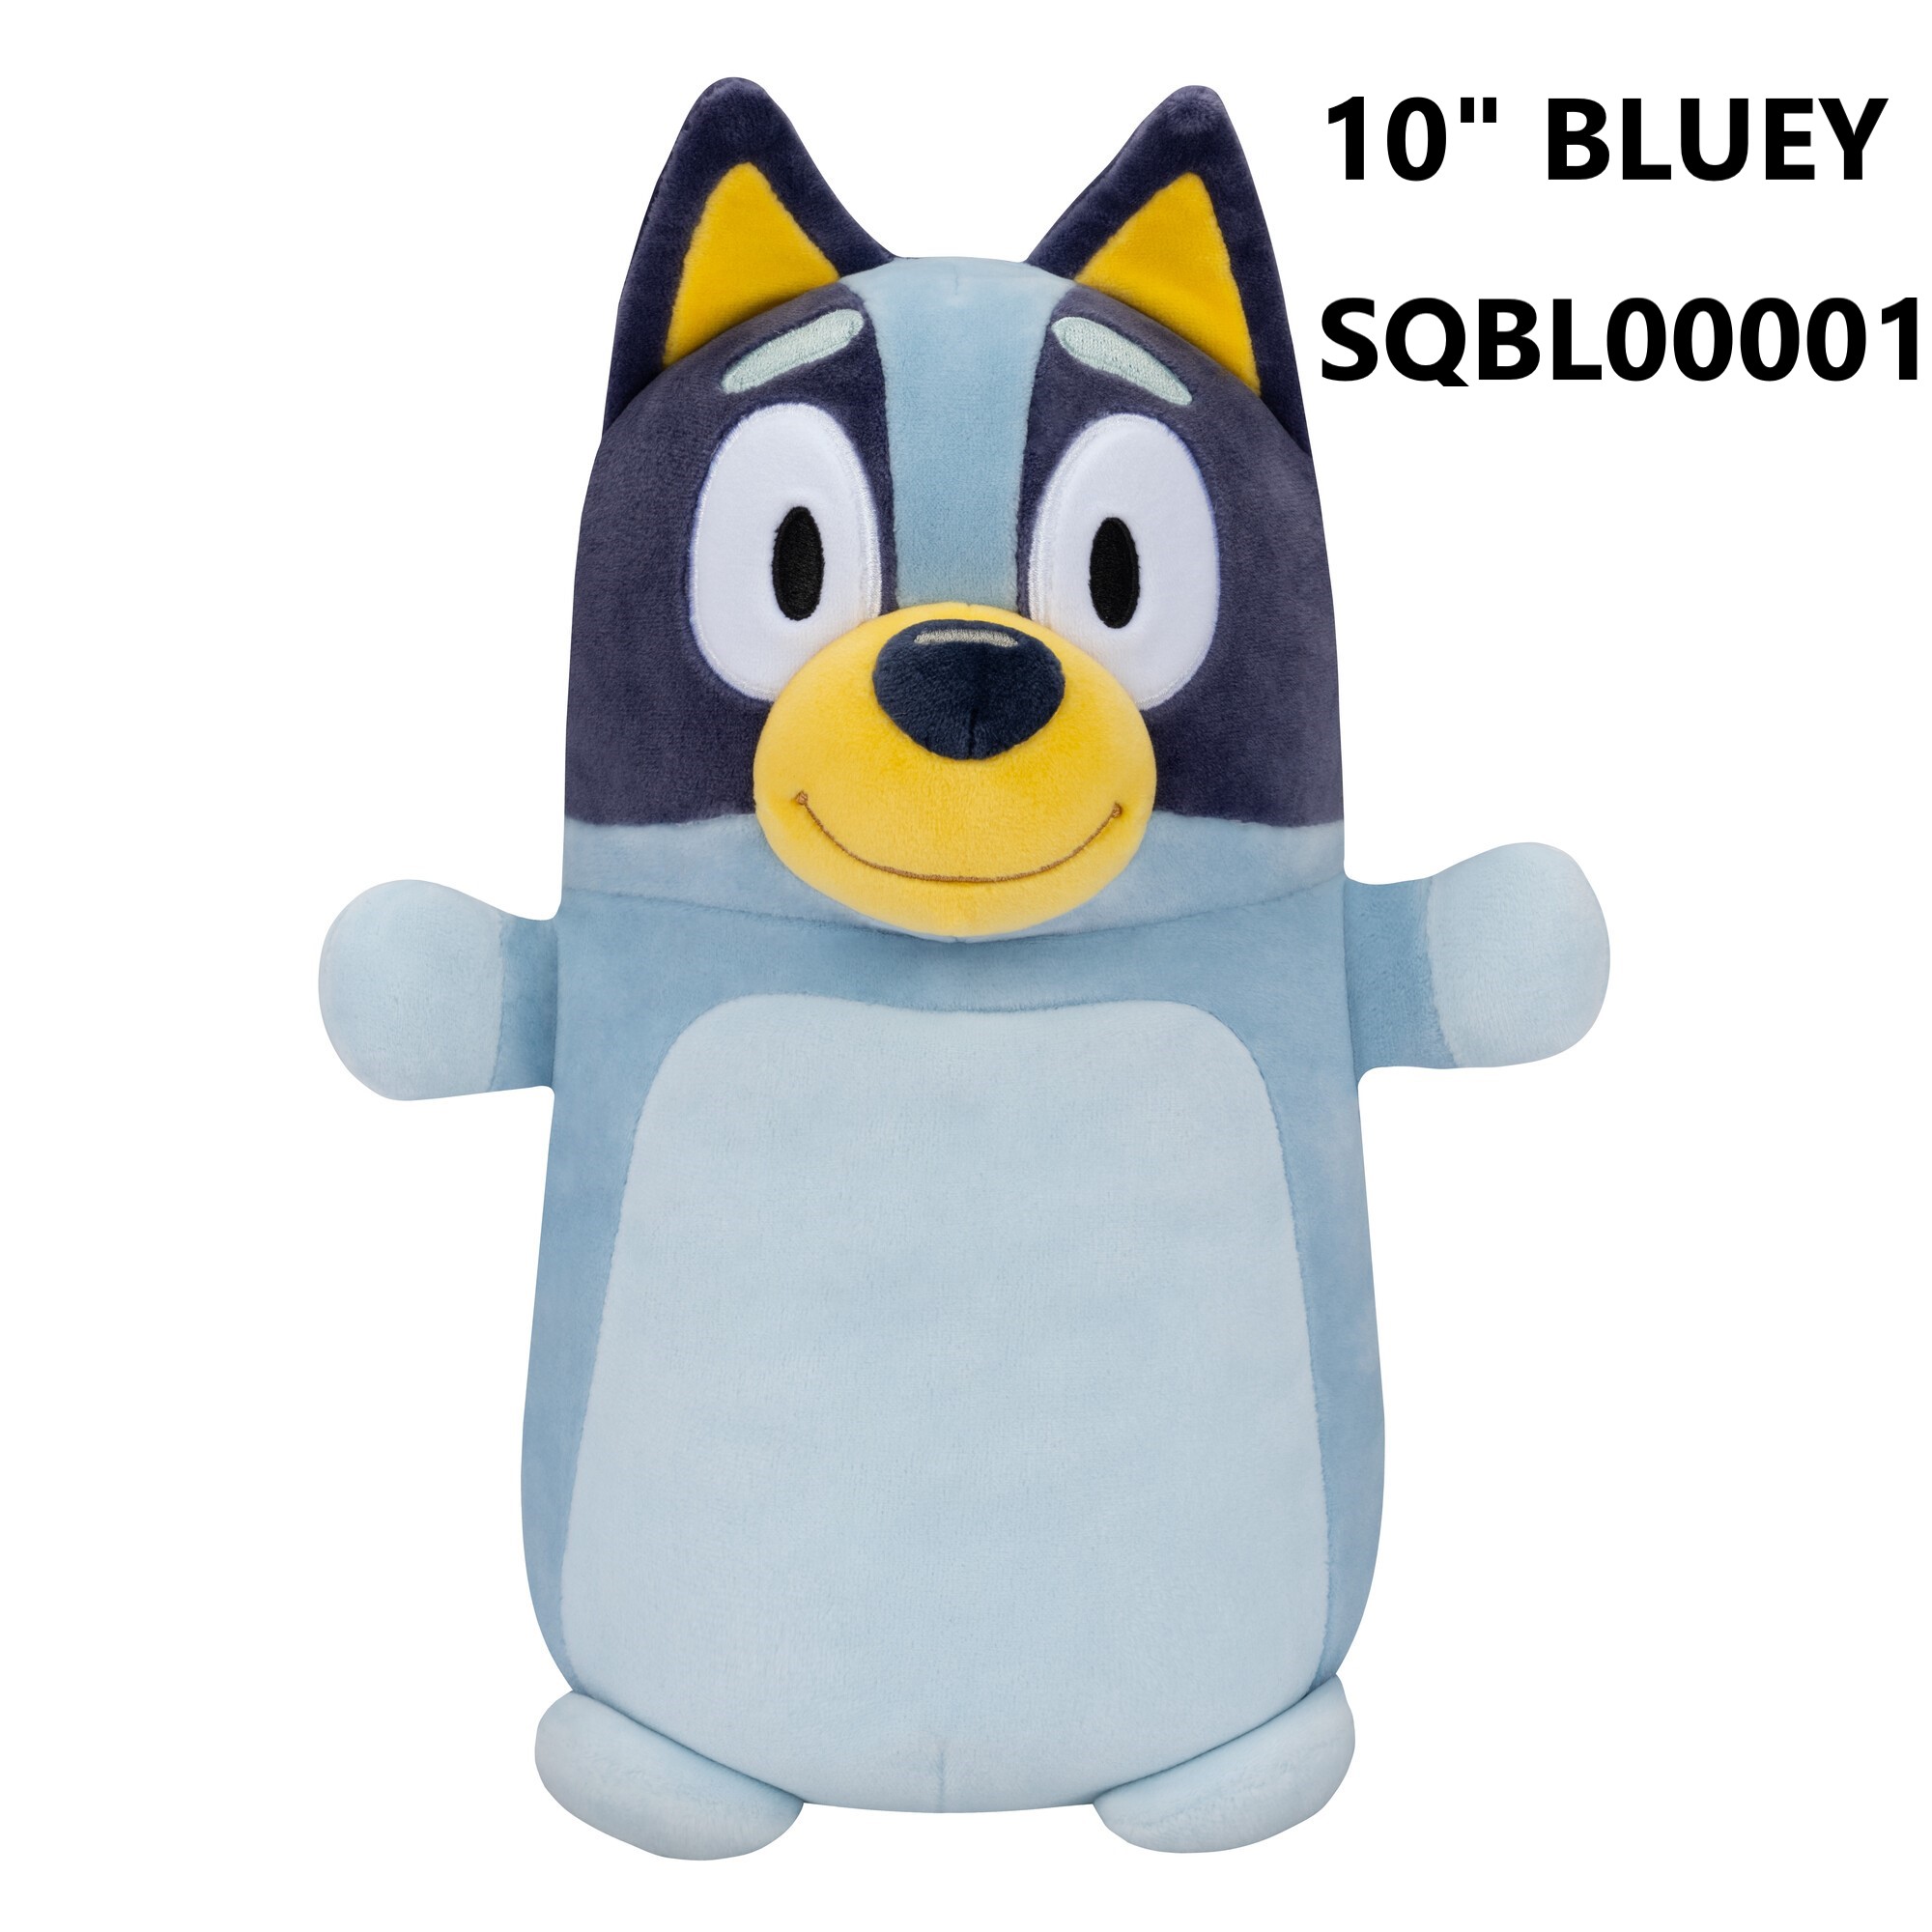 ''SQBL00001
''